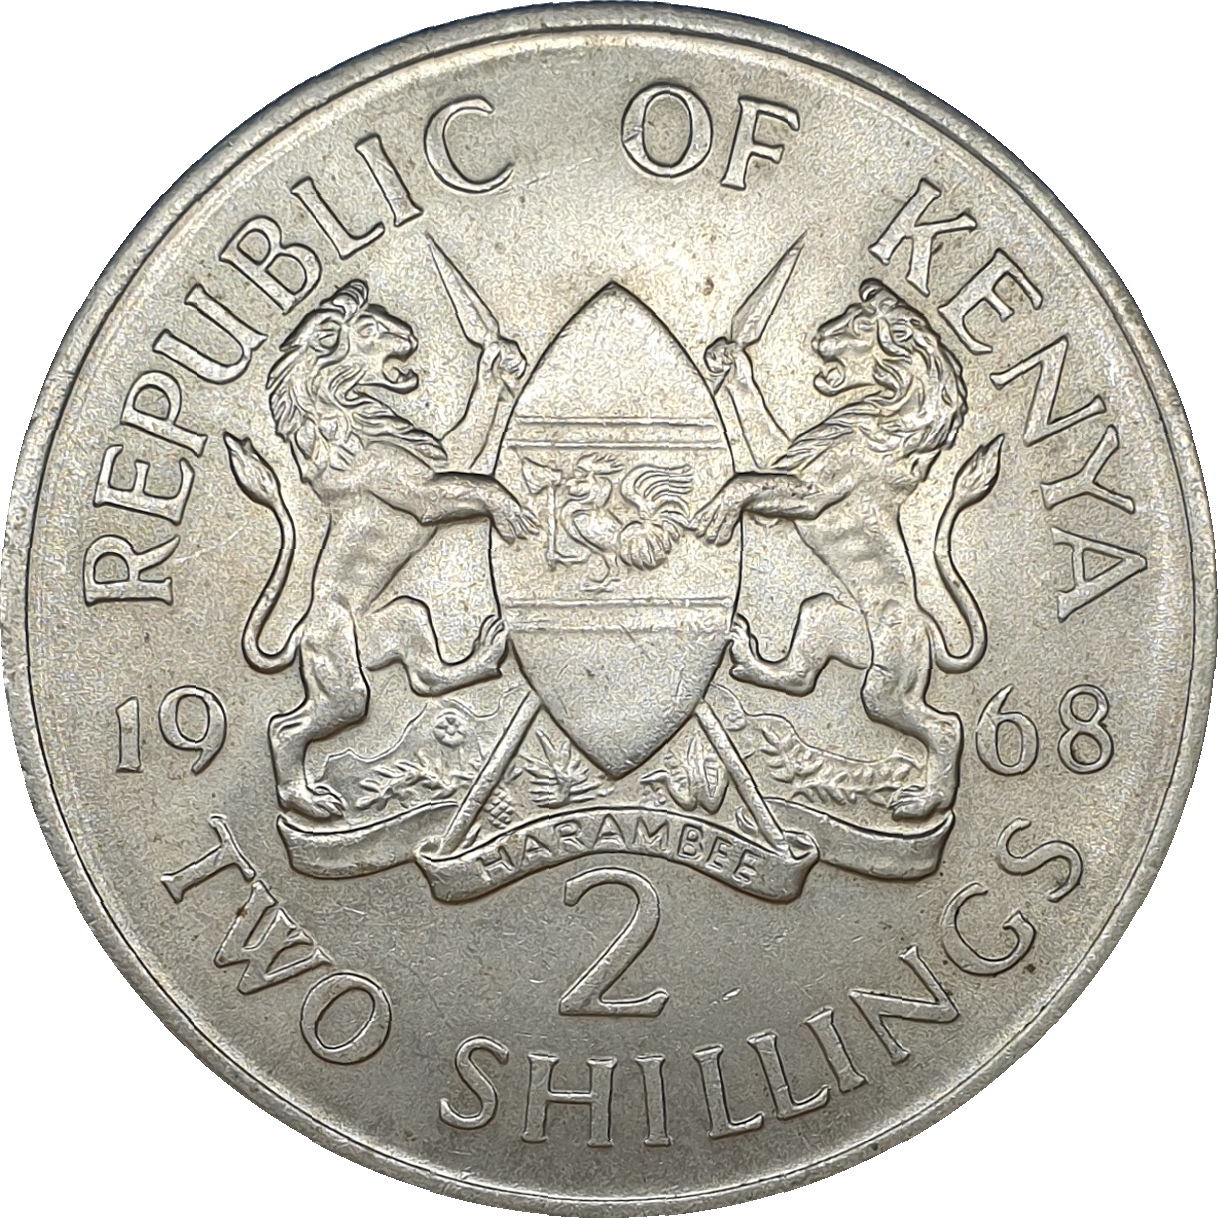 2 shillings - Mzee Jomo Kenyatta - No legend